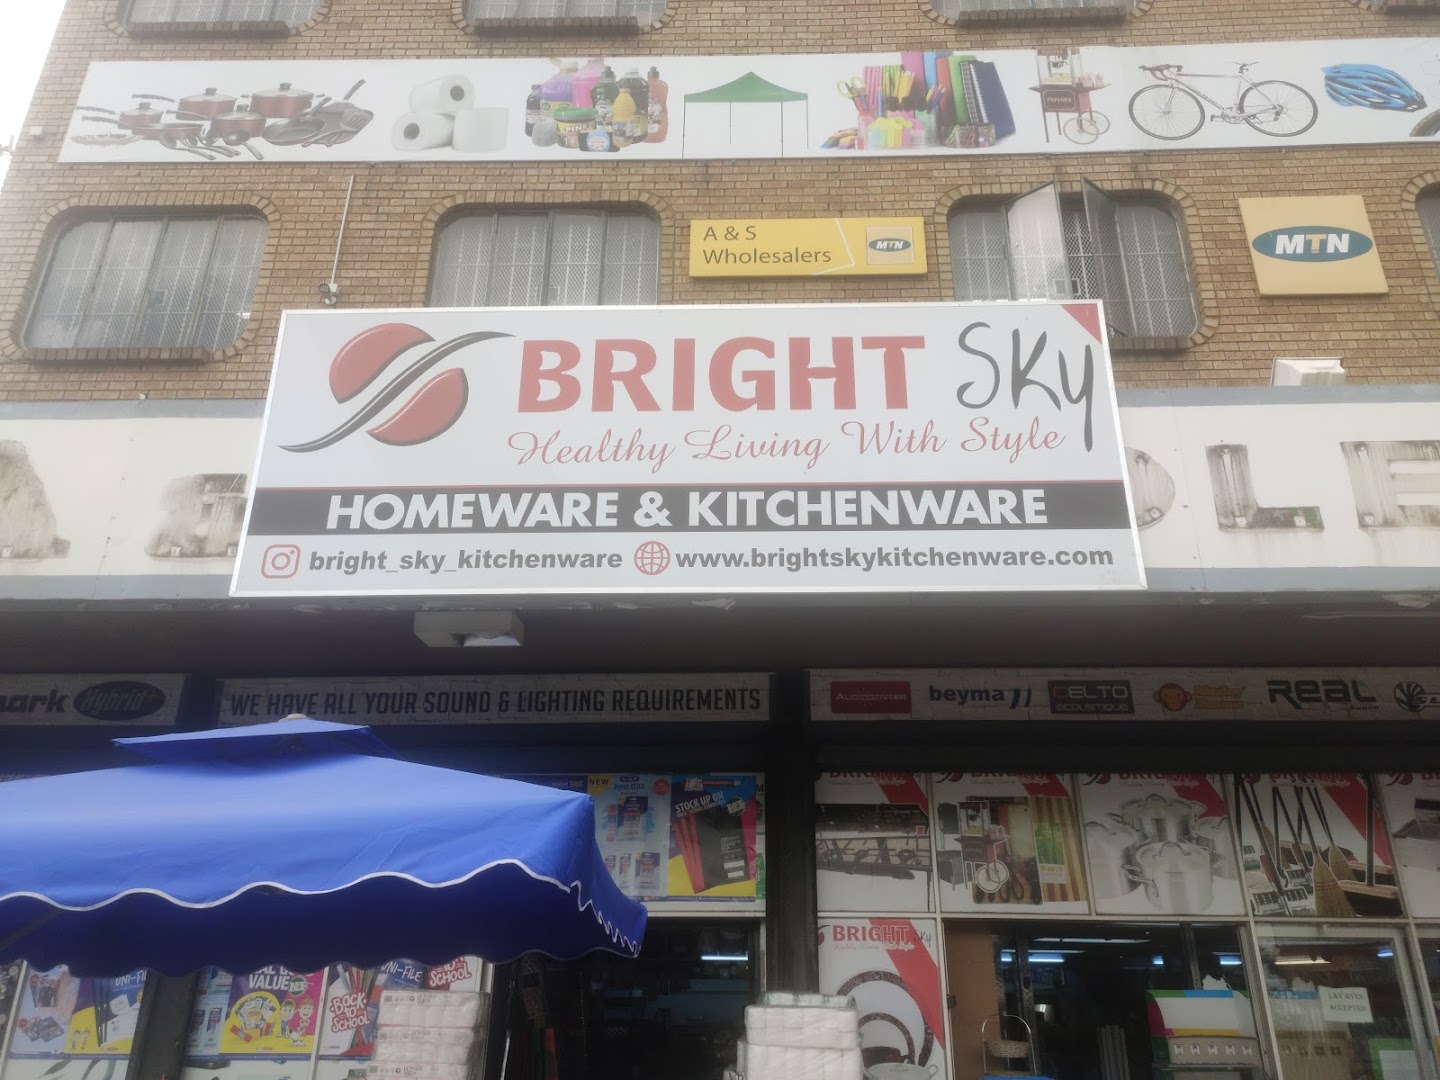 Brightsky Homeware and Kitchenware